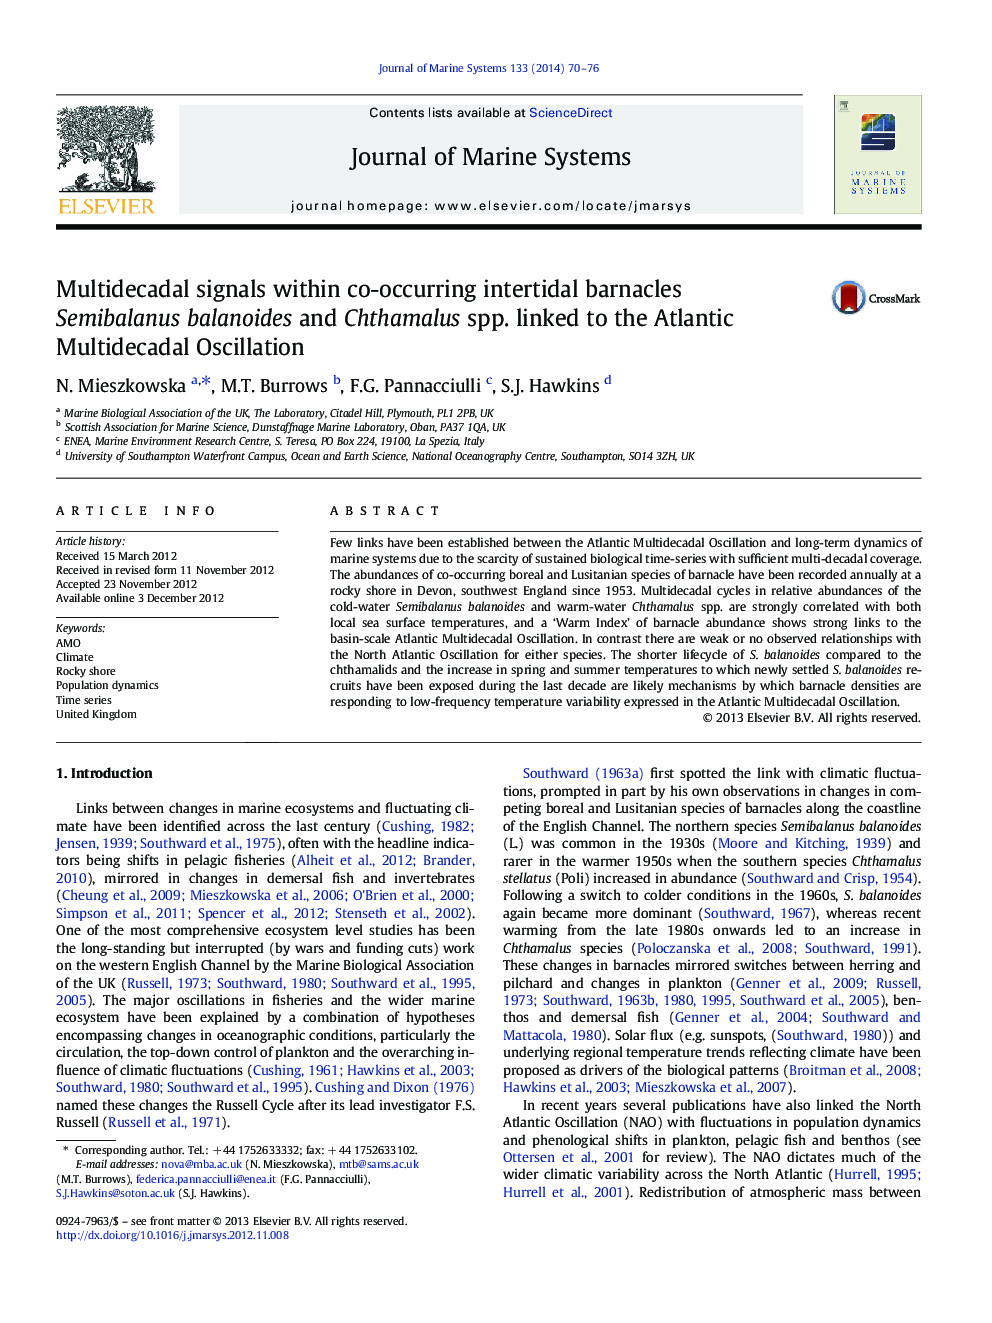 Multidecadal signals within co-occurring intertidal barnacles Semibalanus balanoides and Chthamalus spp. linked to the Atlantic Multidecadal Oscillation